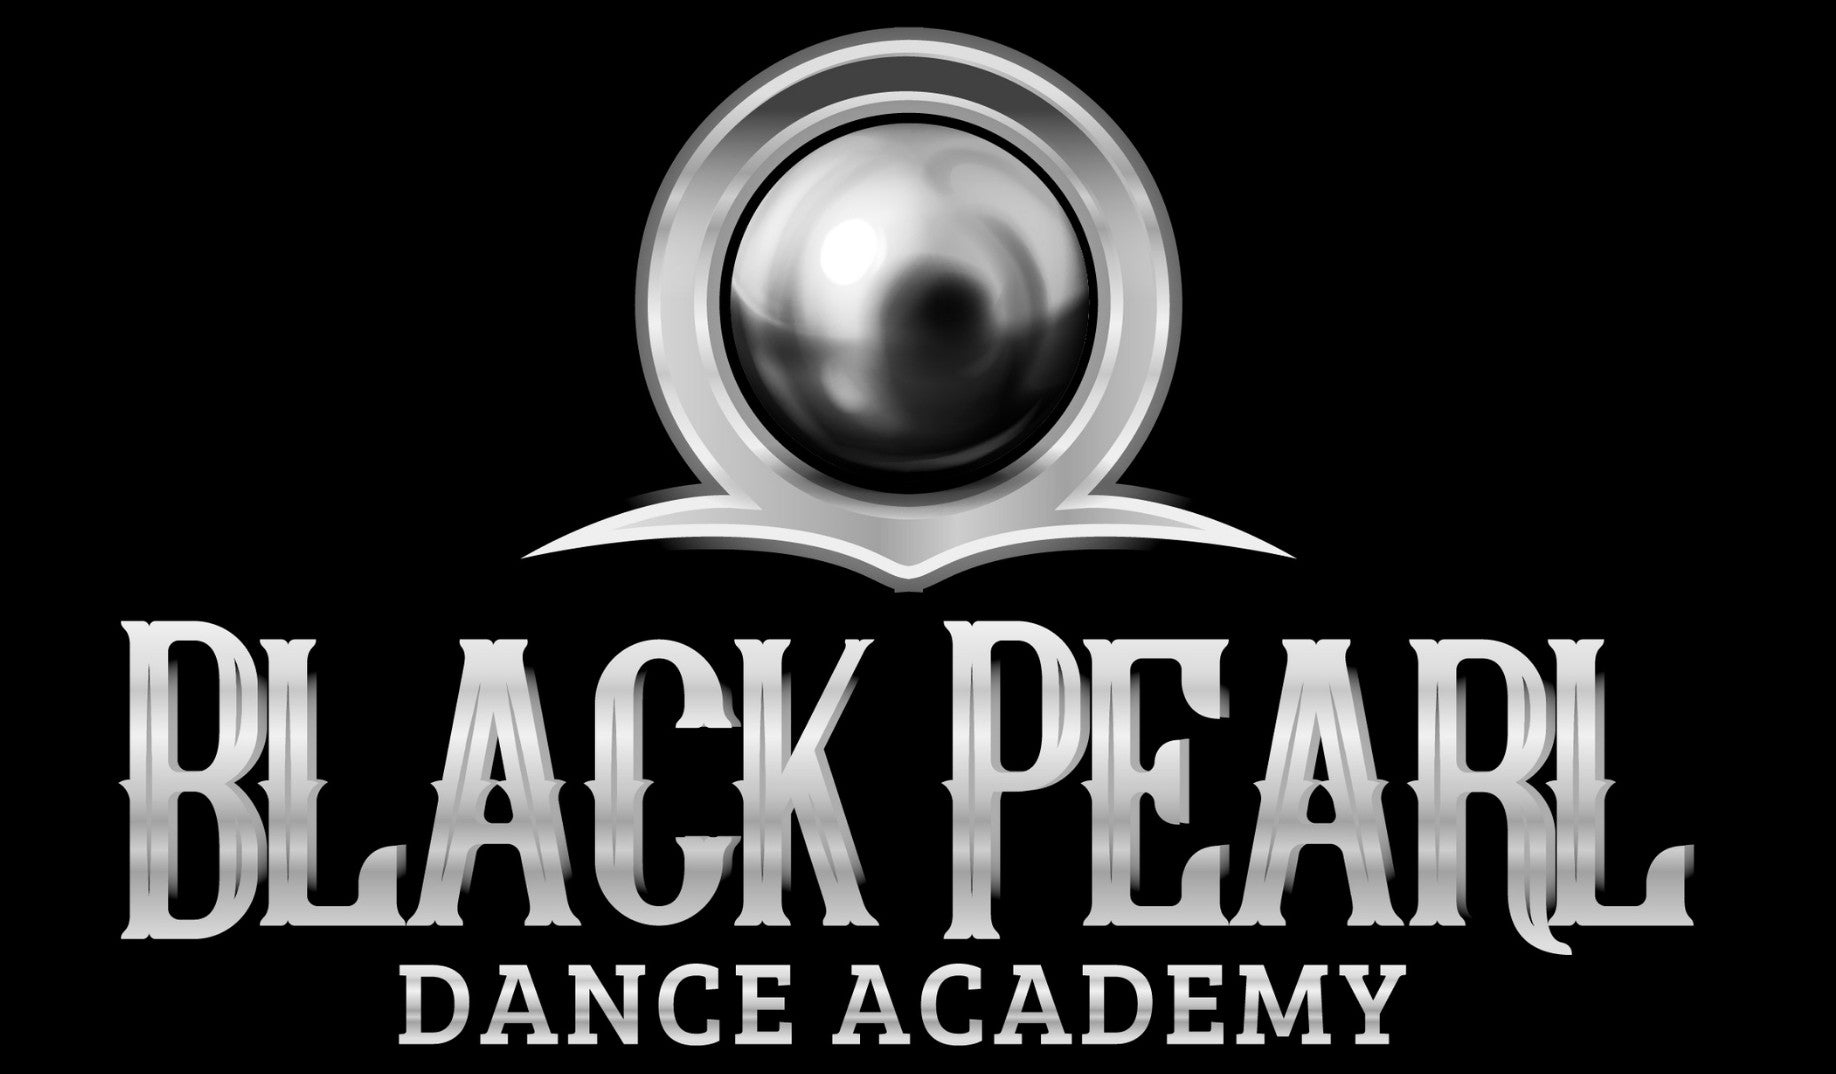 Details more than 83 black pearl logo design